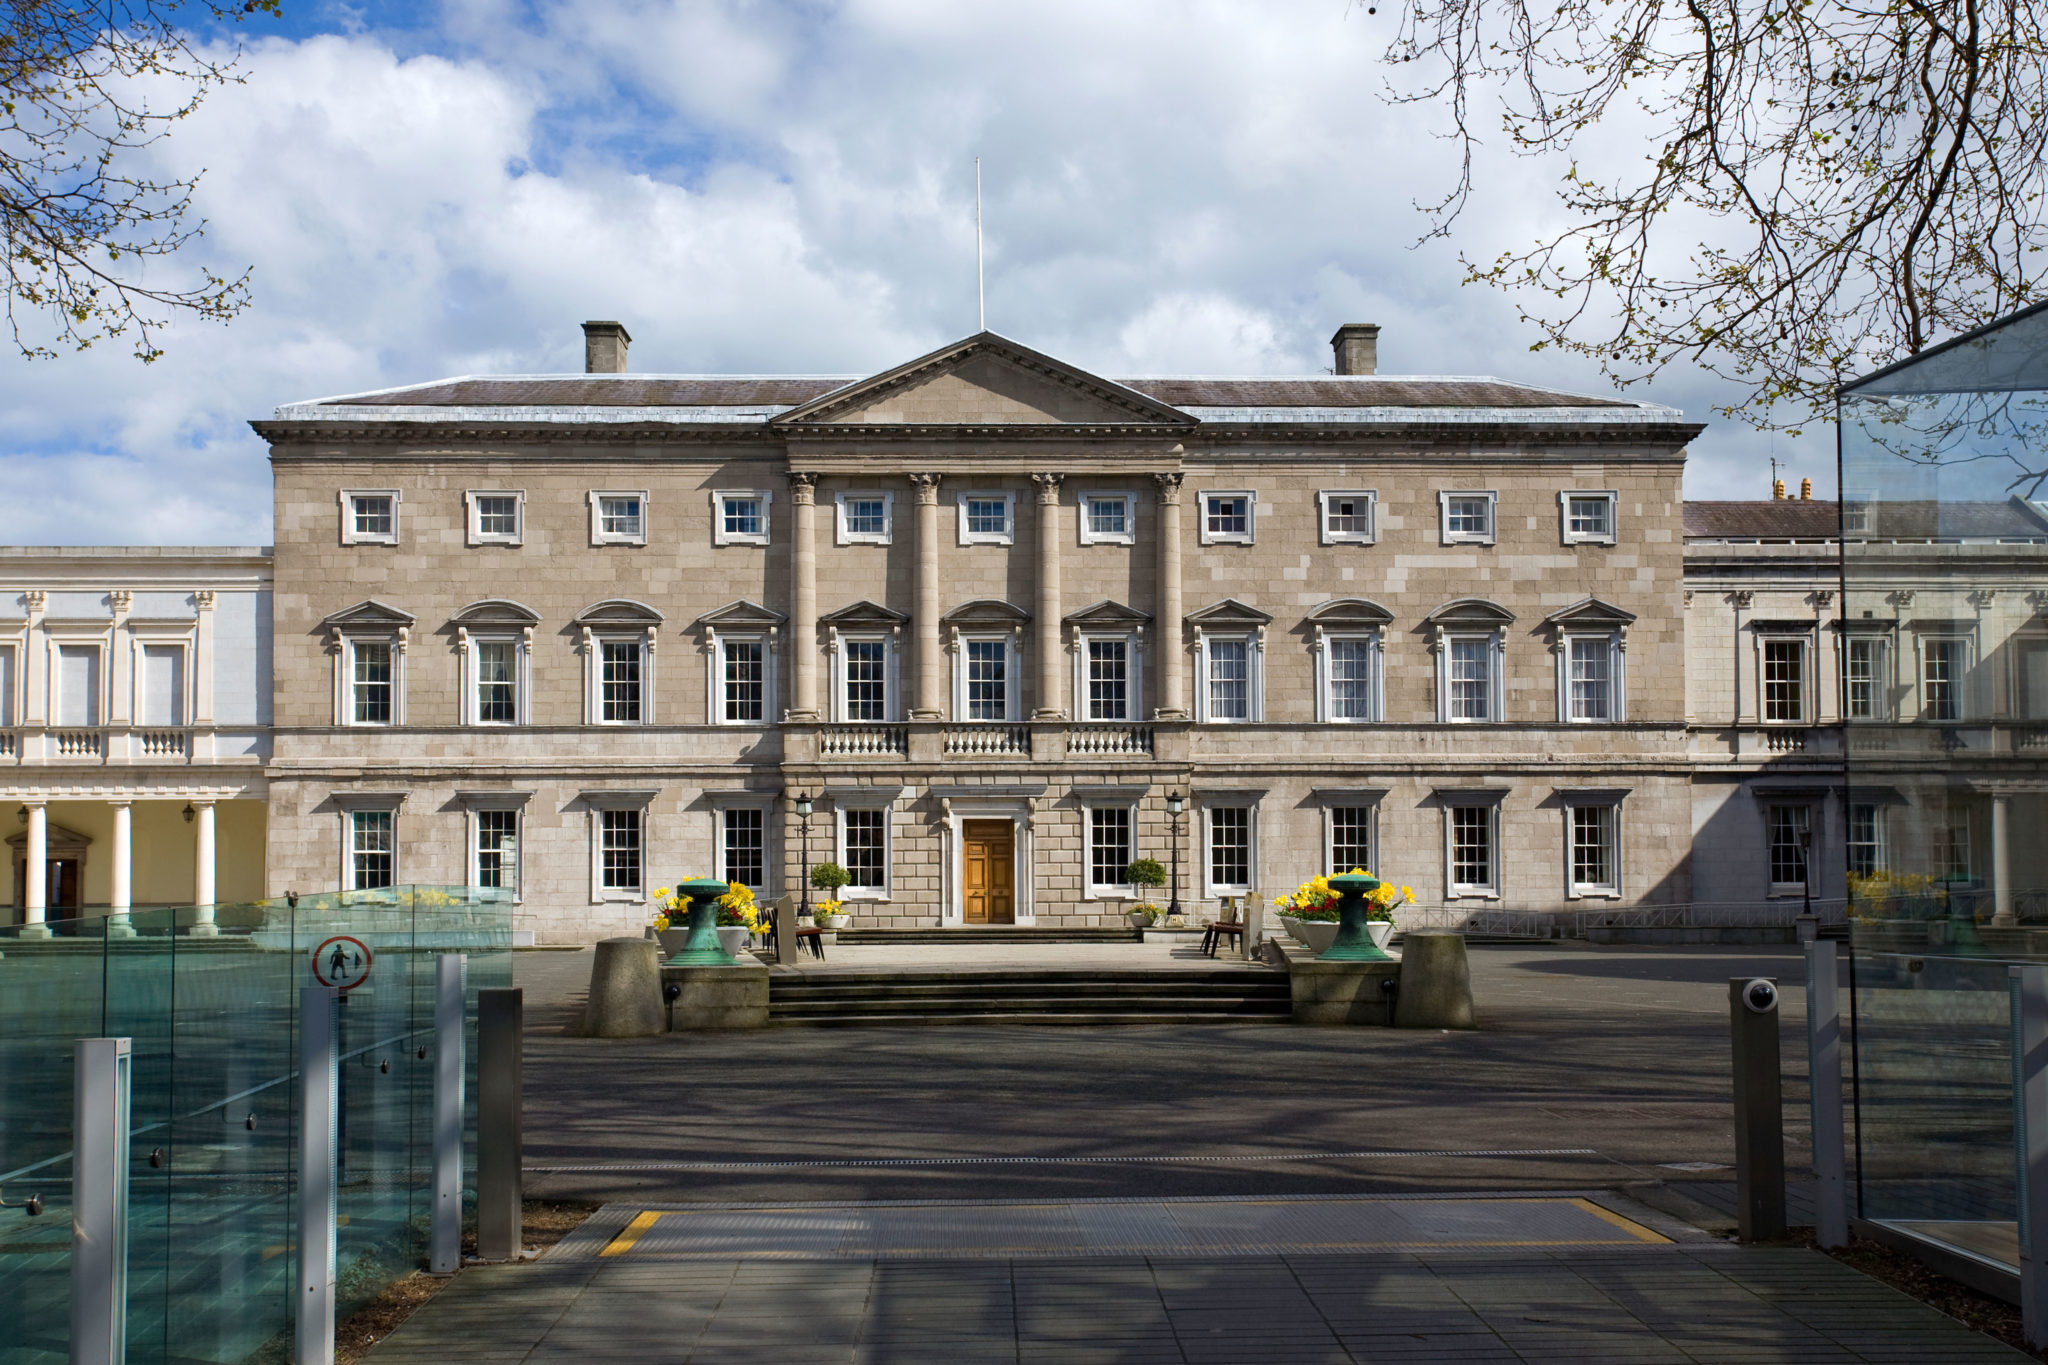 BAAJRM Leinster House, Dail Eireann, Kildare St Dublin which houses the Irish National Parliament. Image shot 2009. Exact date unknown.